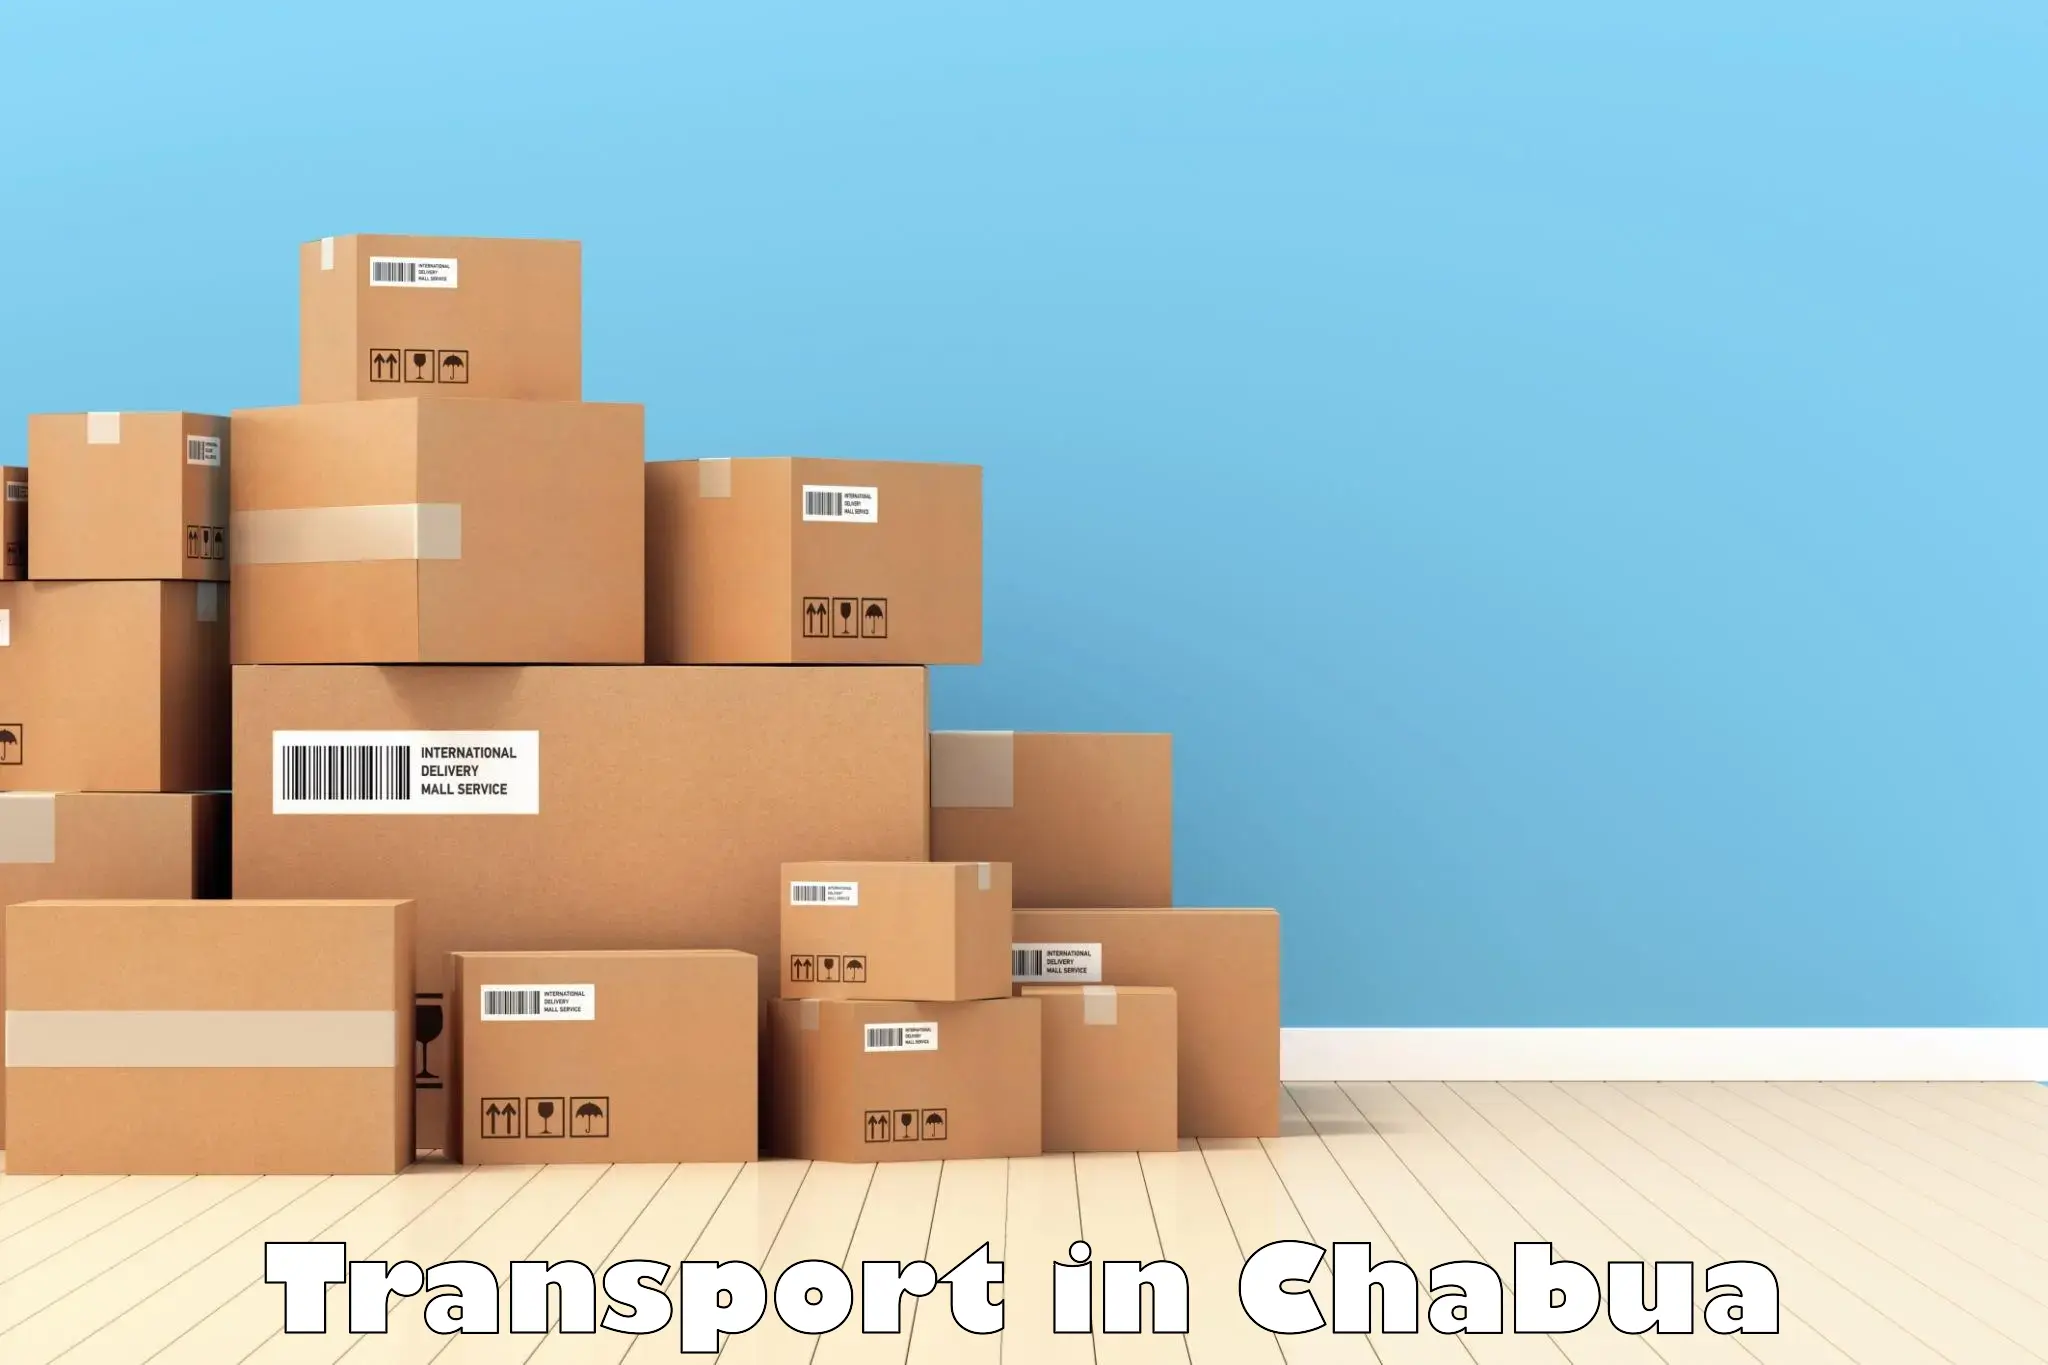 Nearest transport service in Chabua